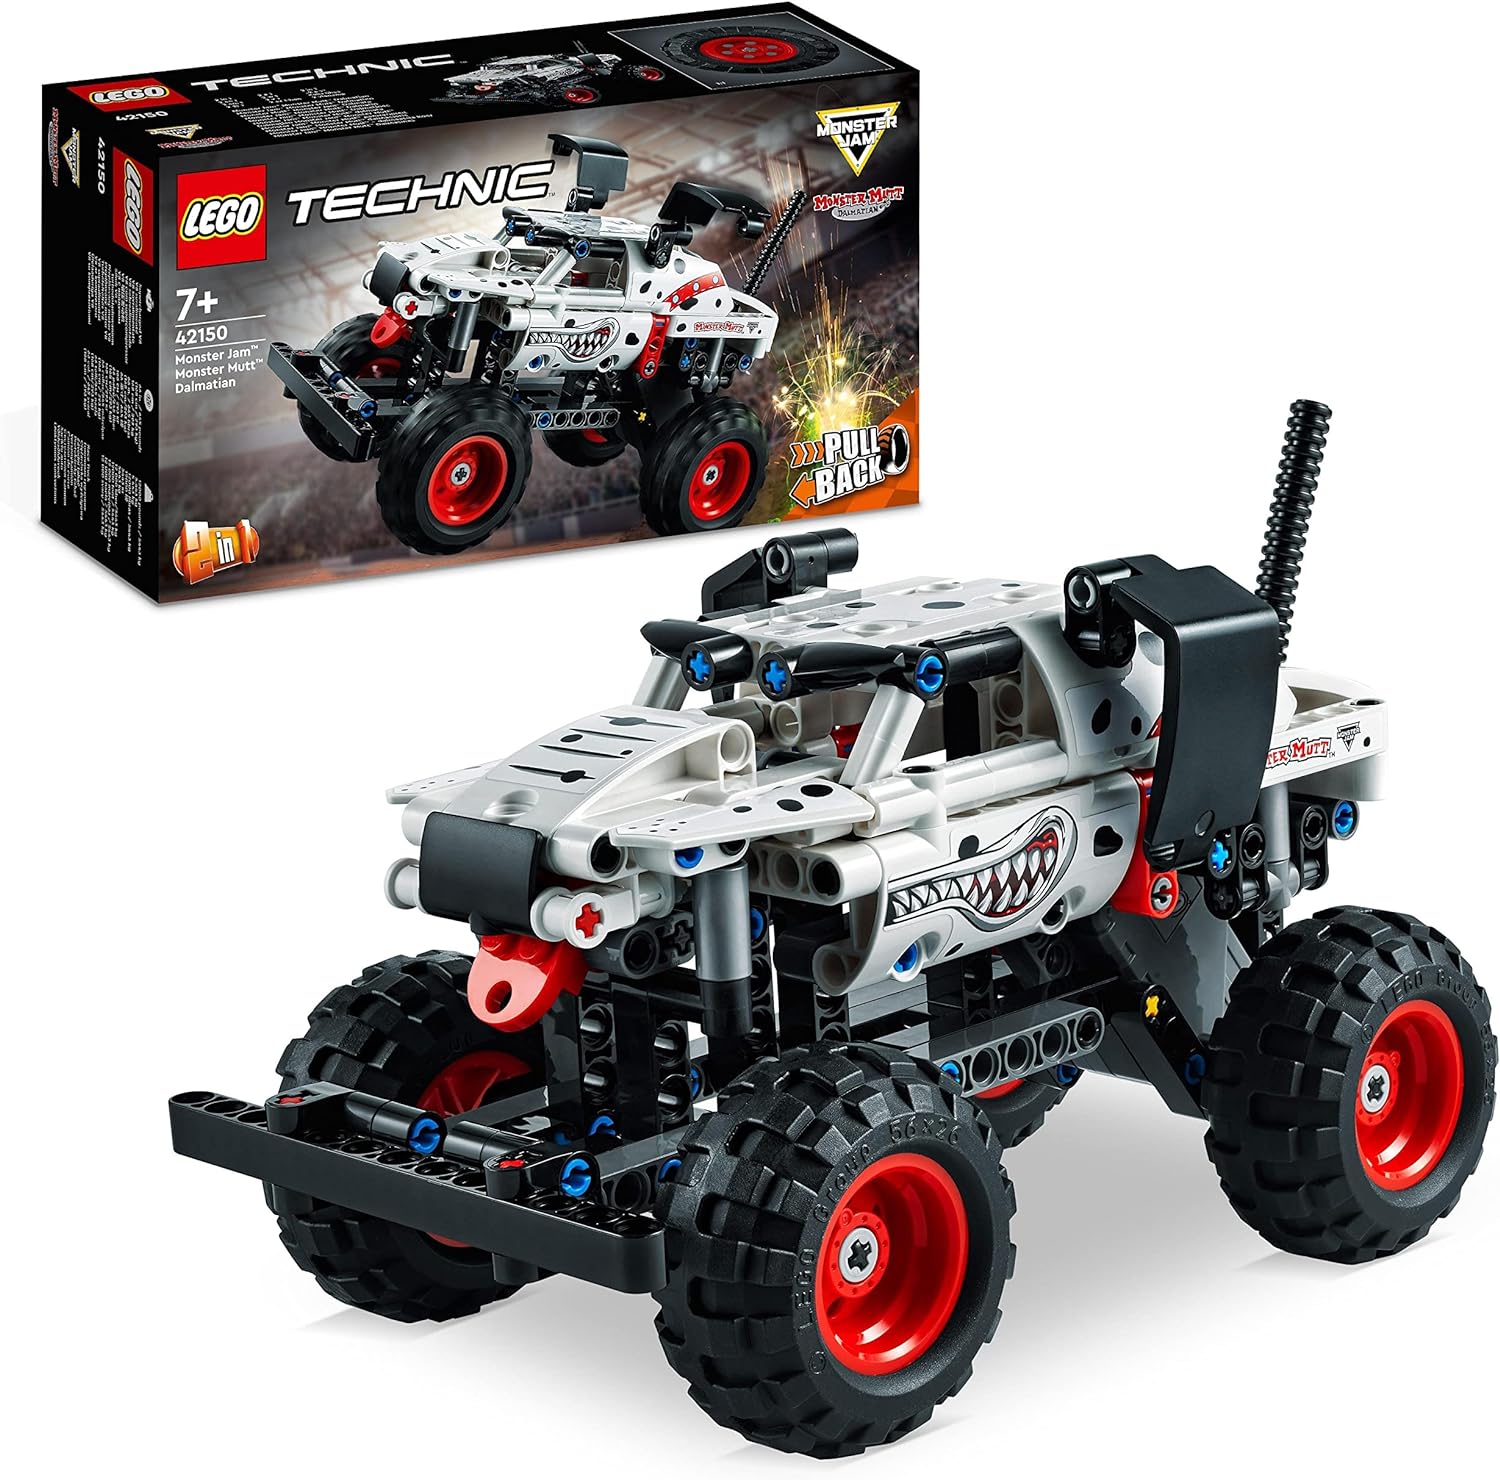 LEGO Technic 42150 Monster Jam Monster Mutt Dalmatian Monster Truck-Spielzeug Rennspielzeug mit Rückziehmotor Bausteine Fahrzeug